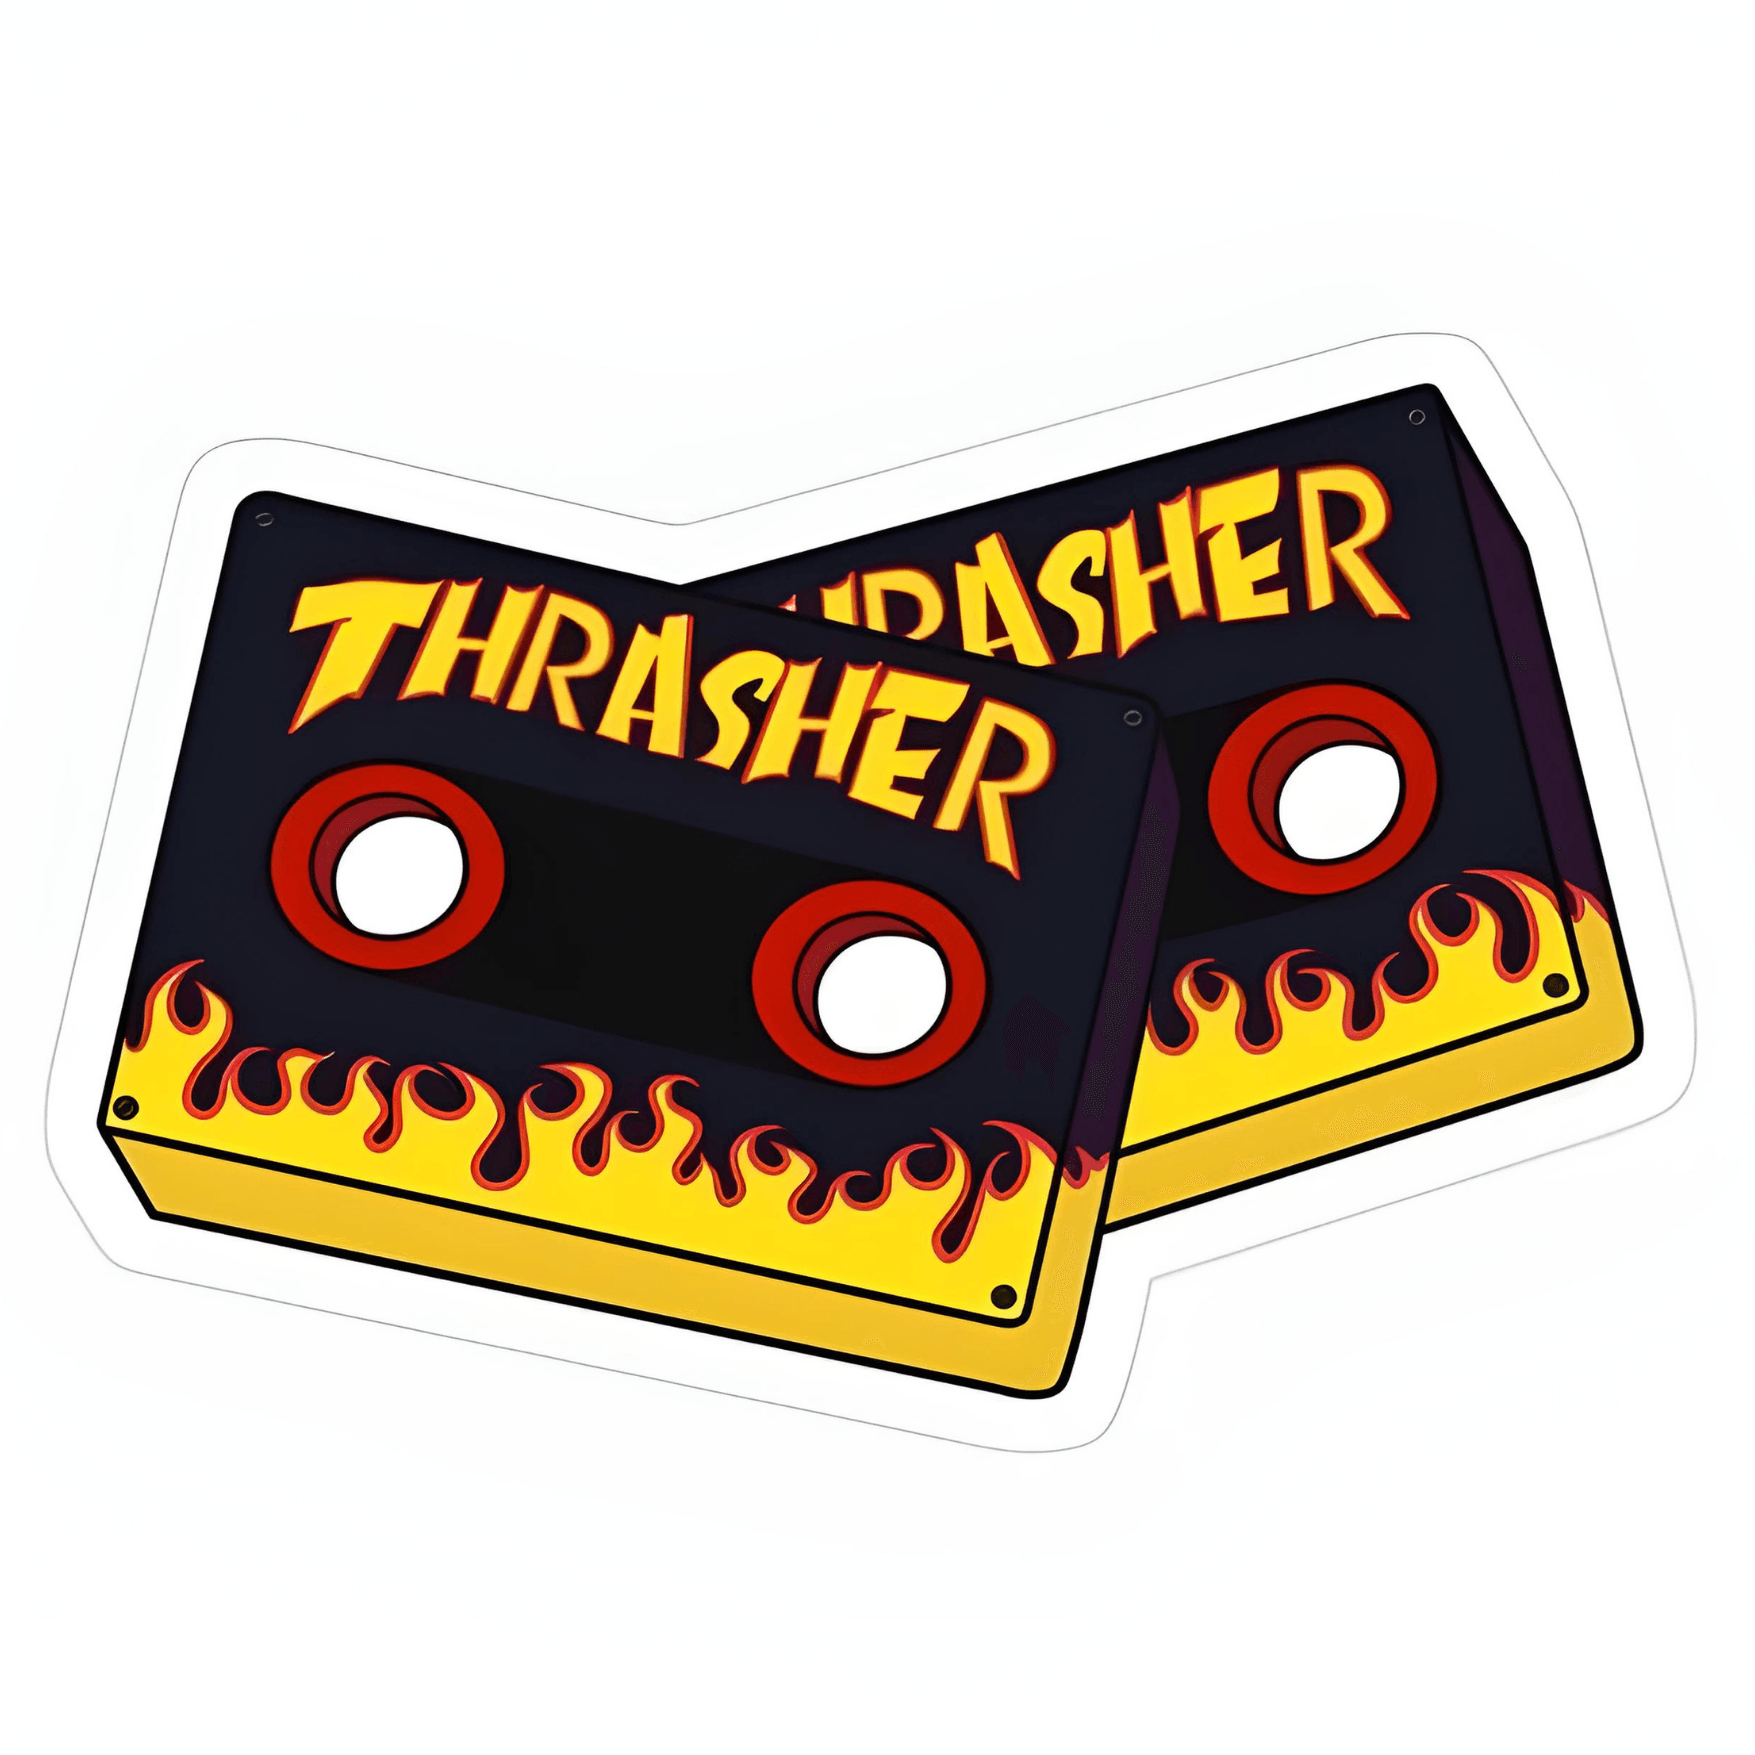 Treasher sticker 6cm